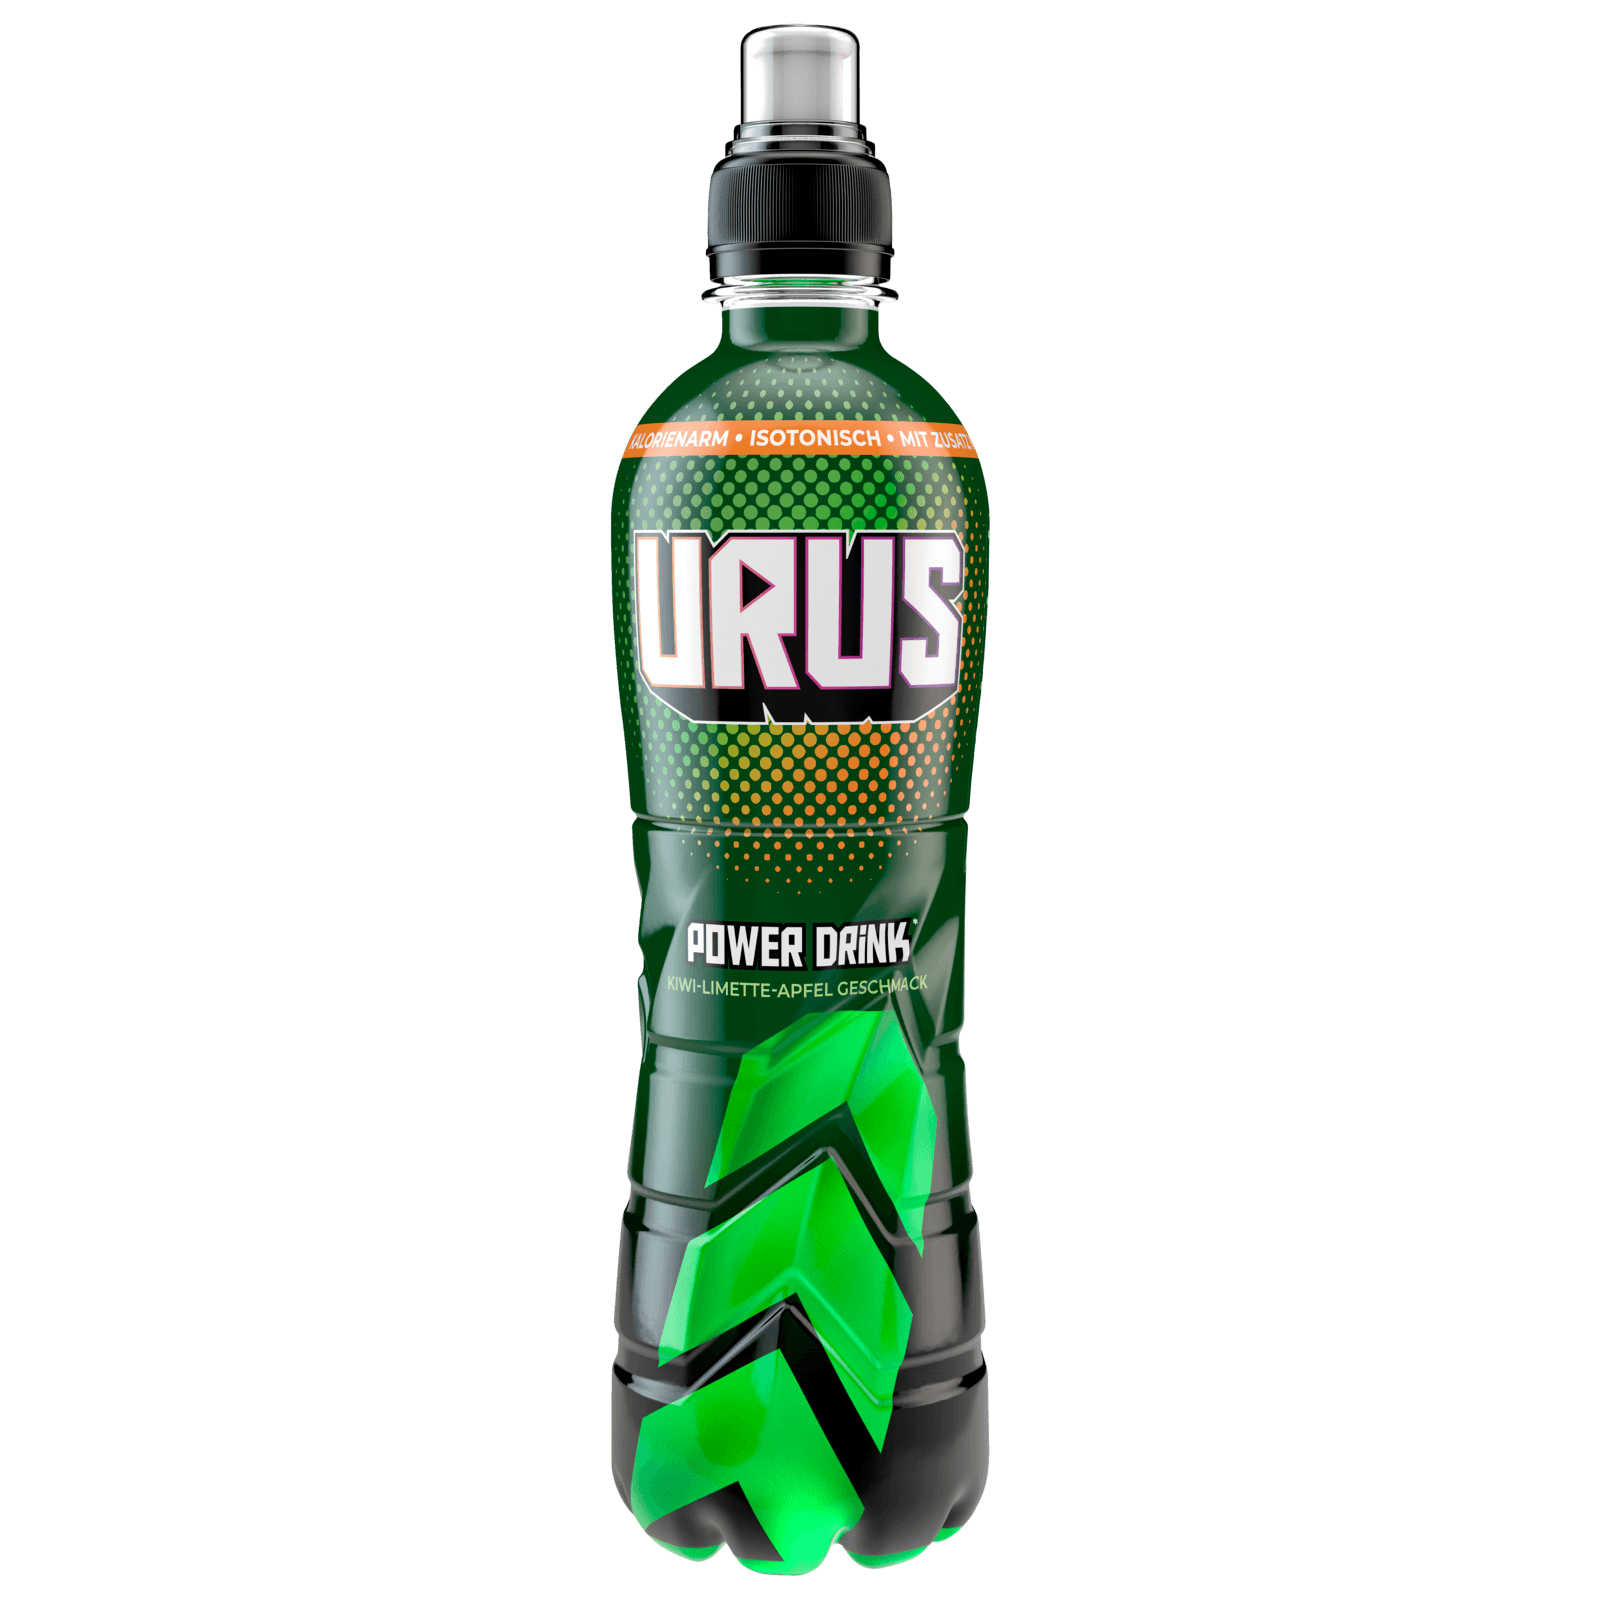 Urus Power Drink Kiwi-Limette-Apfel 0,5l bei REWE online bestellen!